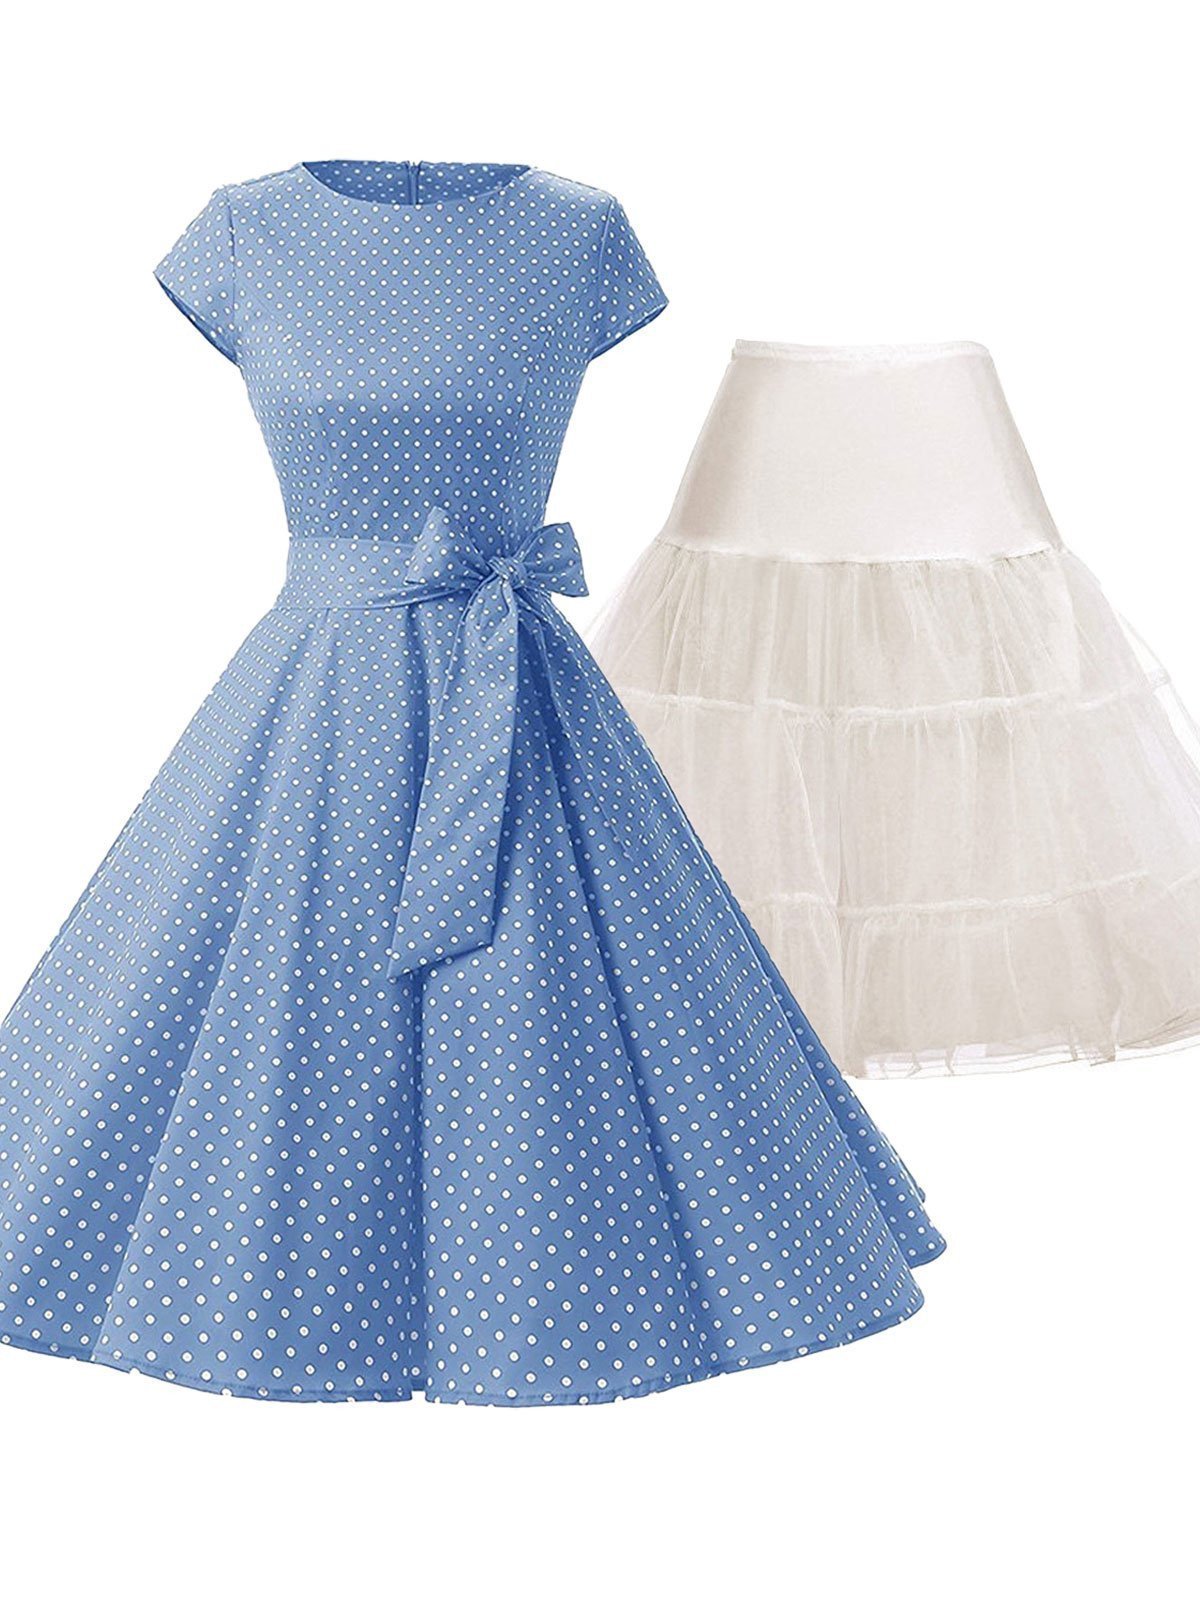 2PCS Top Seller Blue Polka Dot 1950s Dress & White Petticoat